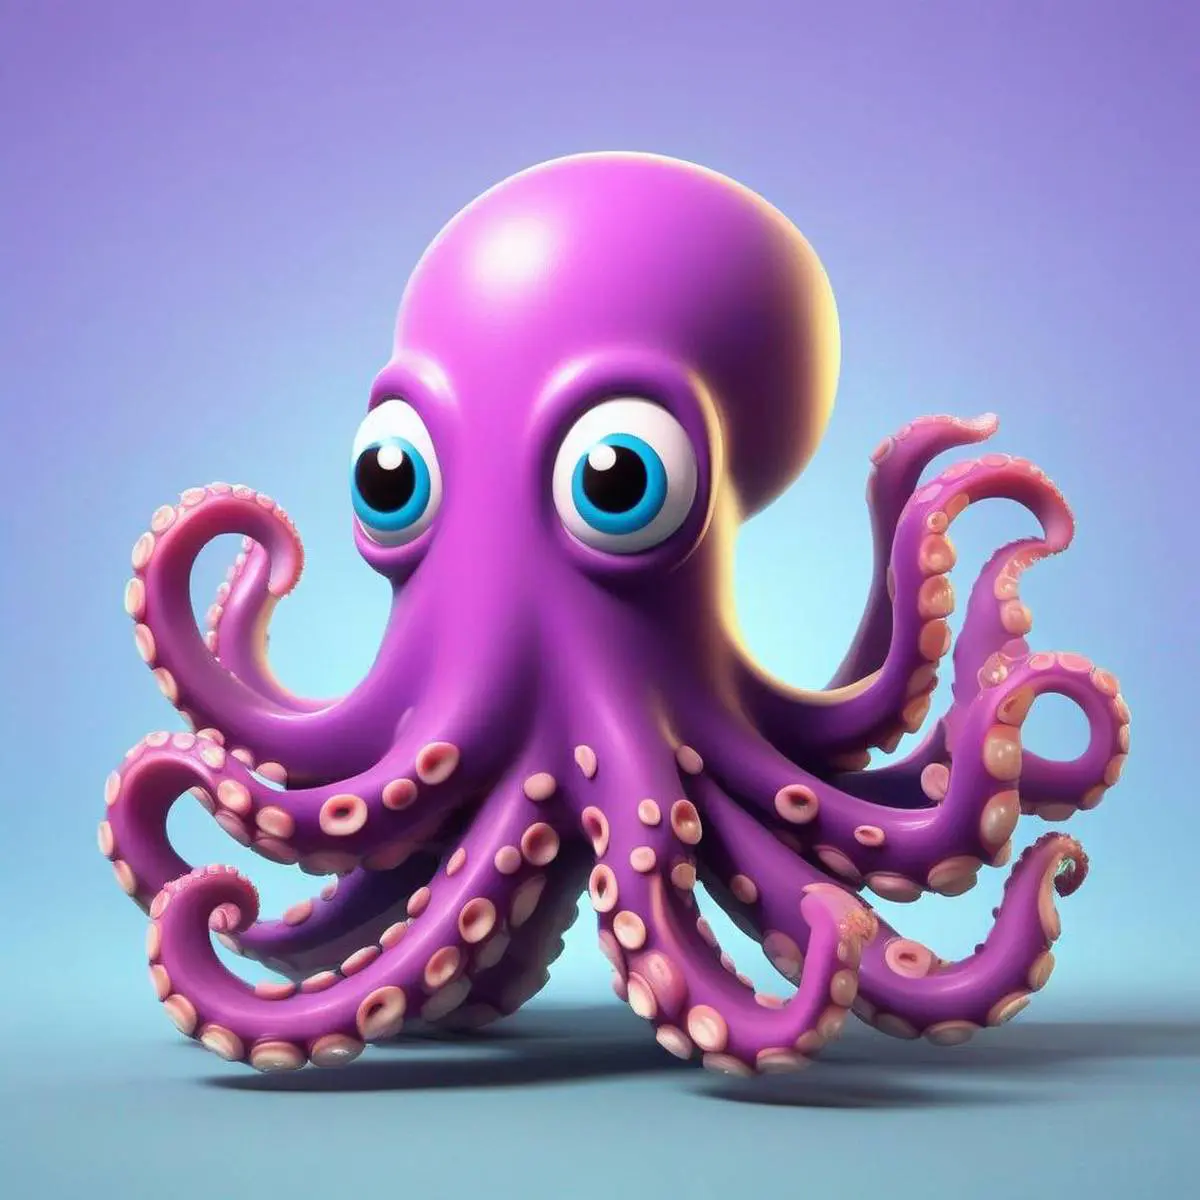 Octopus puns